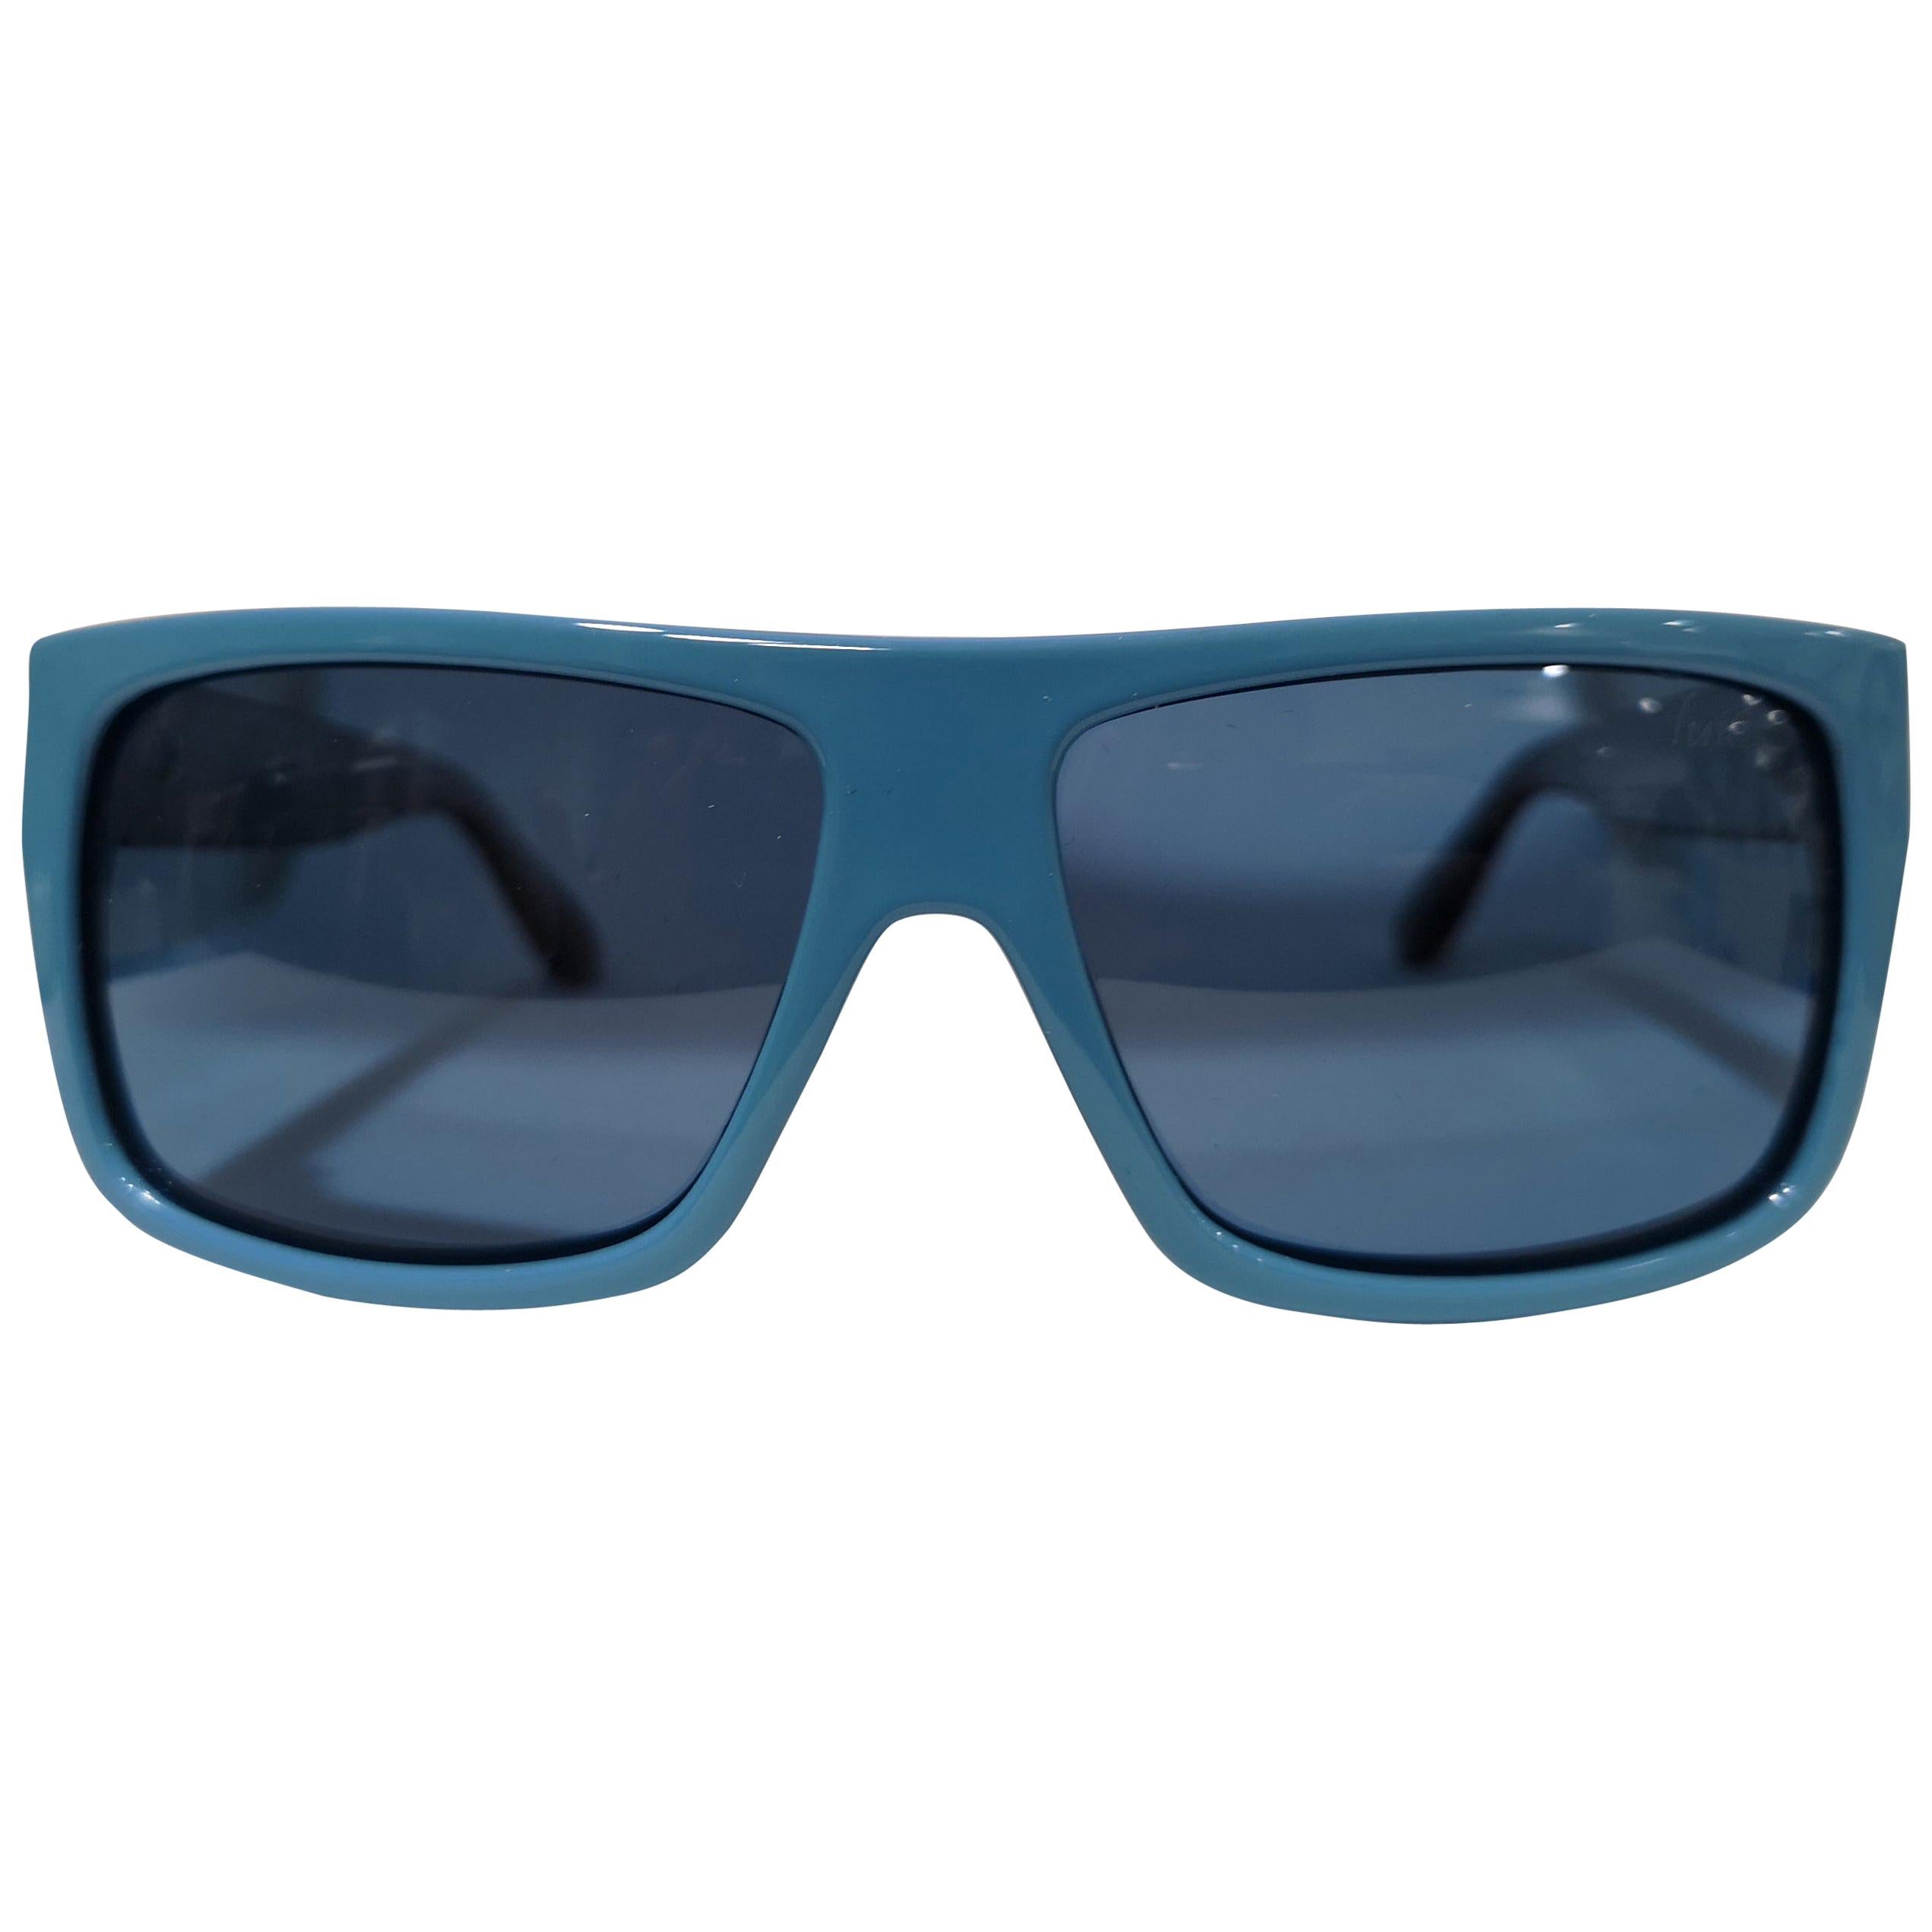 Luisstyle blue sunglasses NWOT 